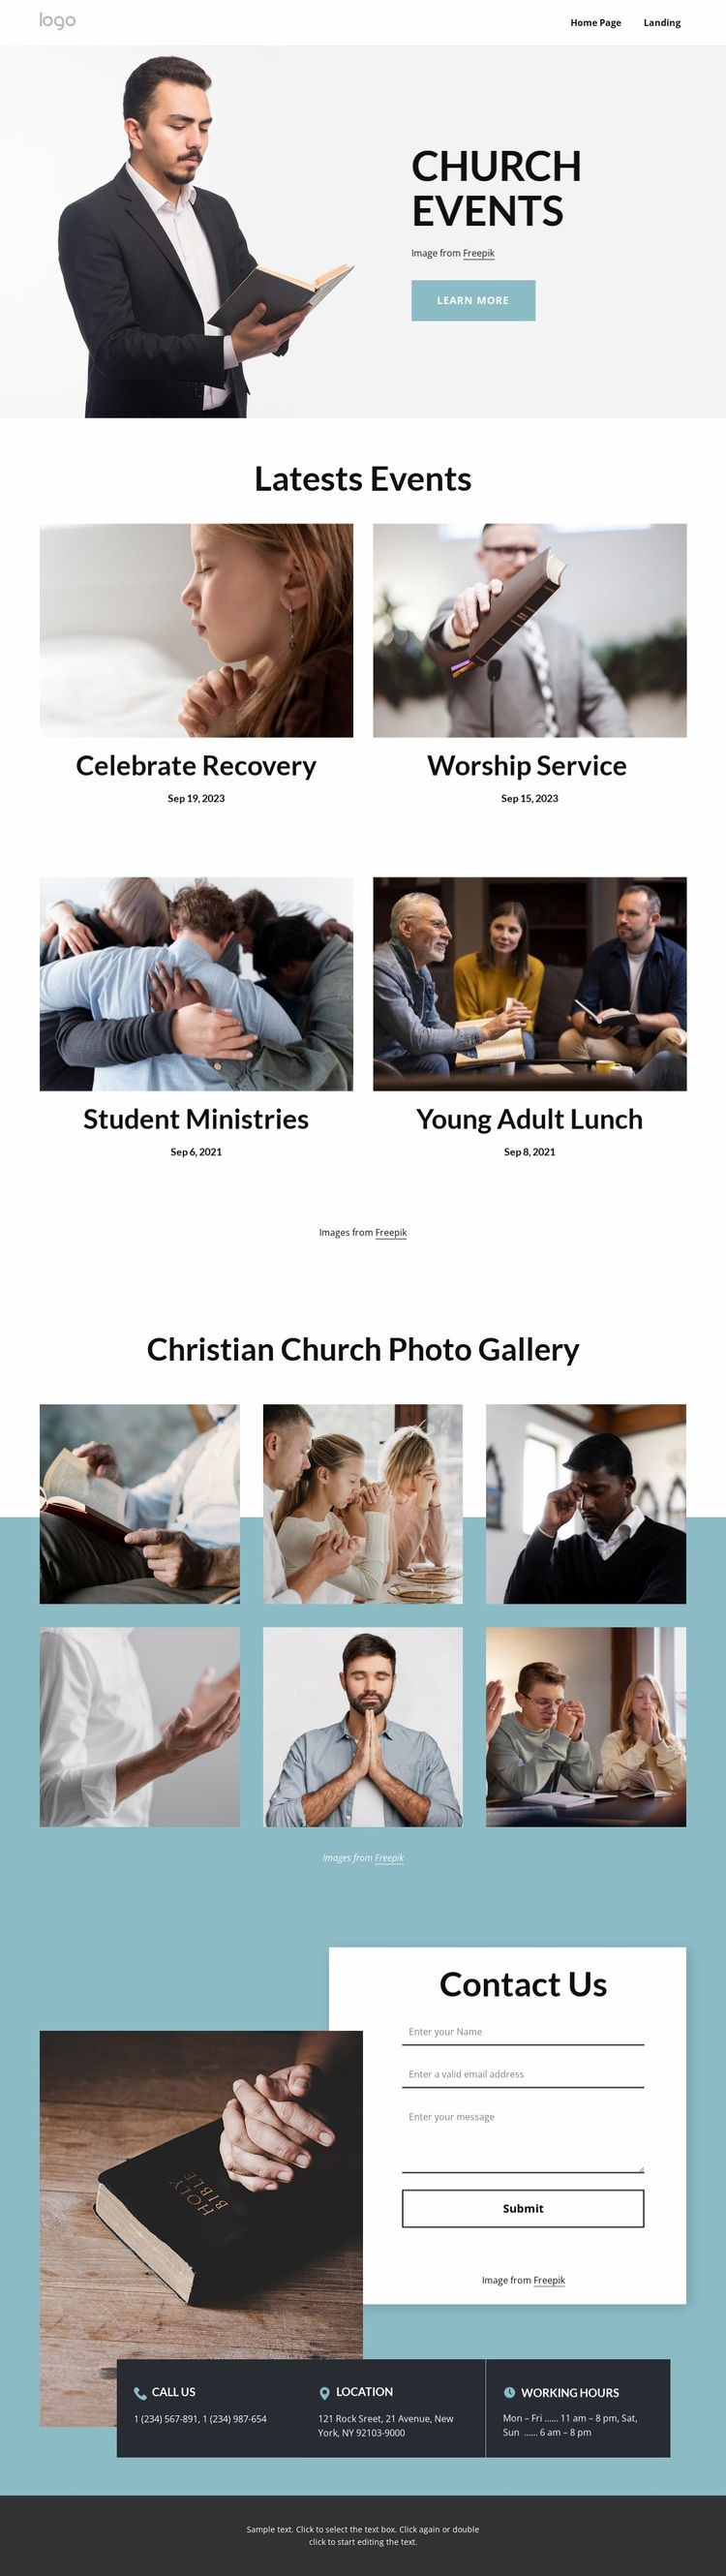 Church events Website Design